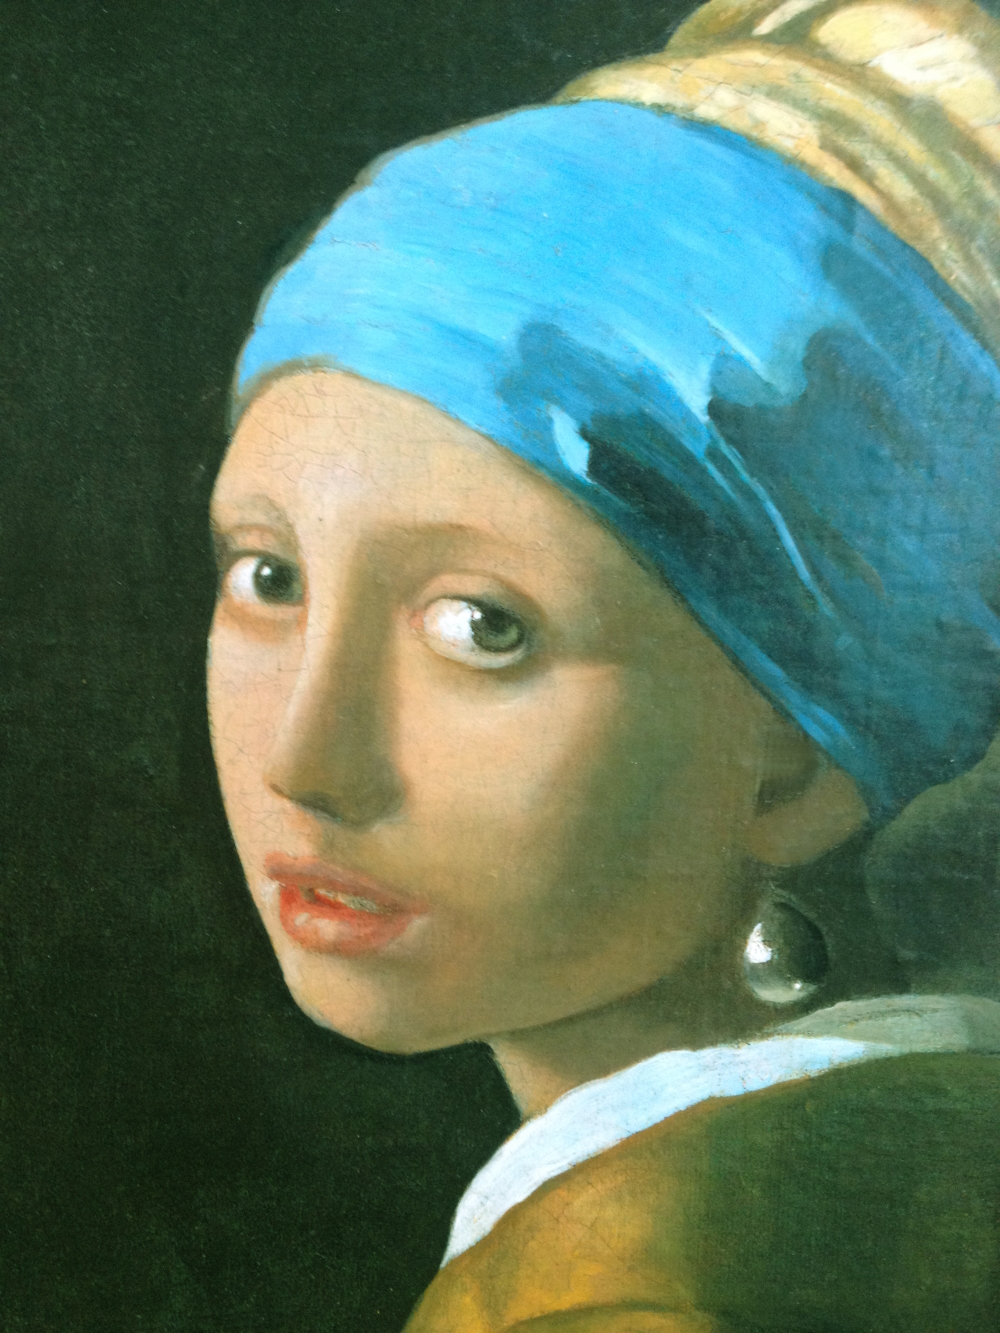 Identical to the original: Bottega Tifernate's reprodution of Jan Vanmeer's 'The Girl with the Pearl Earring'.